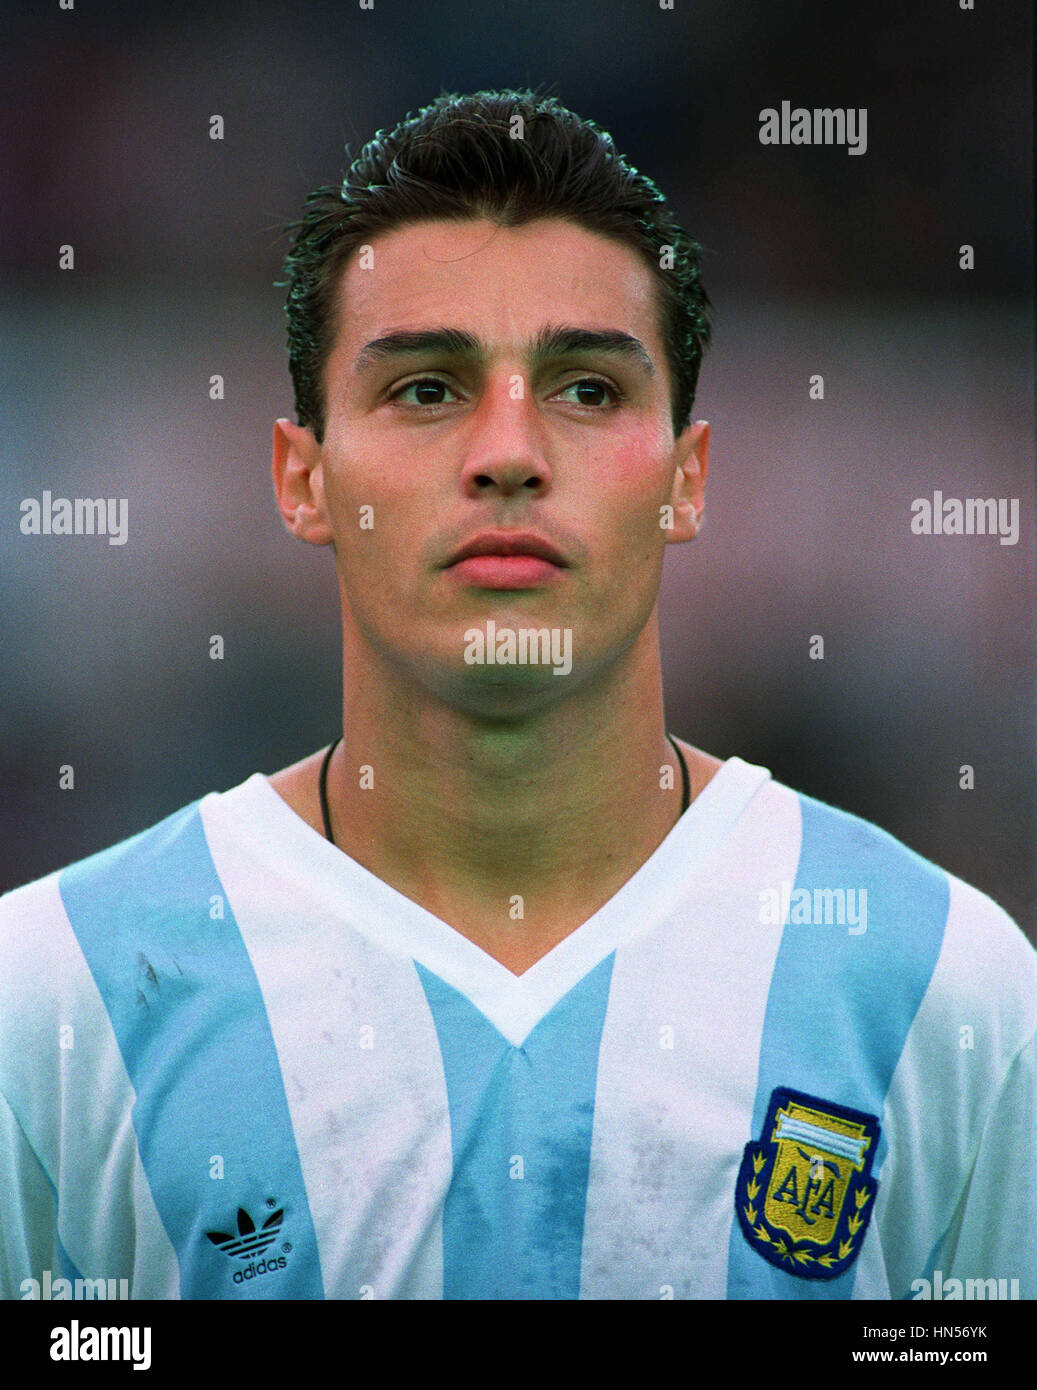 ALFREDO MORENO ARGENTINA & INDEPENDIENTE FC 27 June 1991 Stock Photo